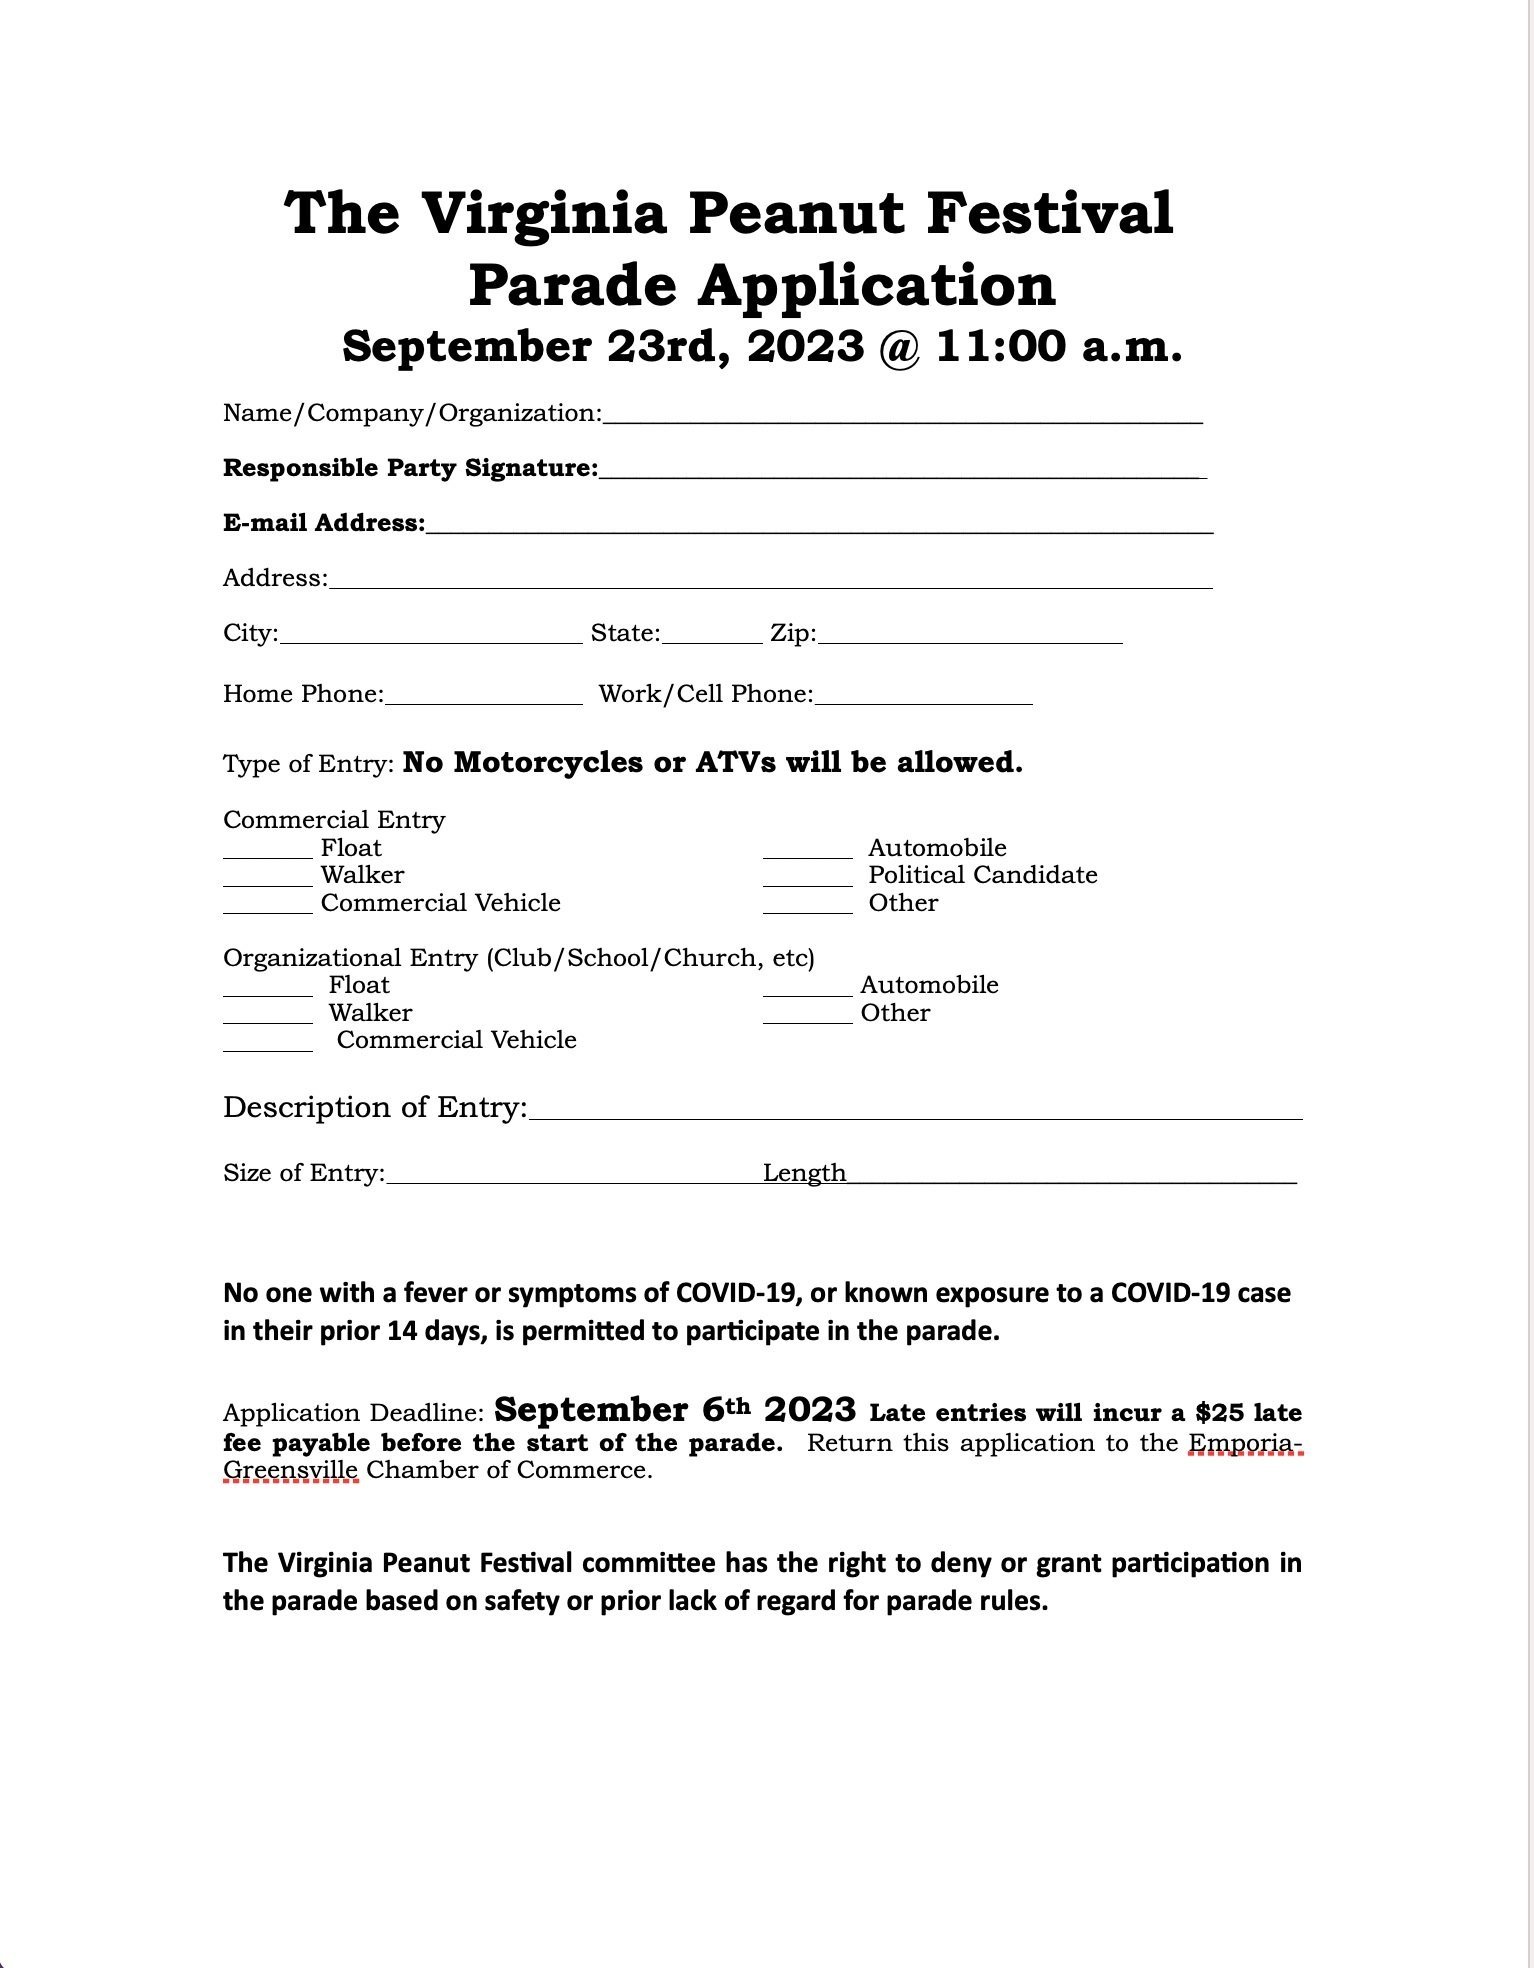 2023 VPF Parade Application